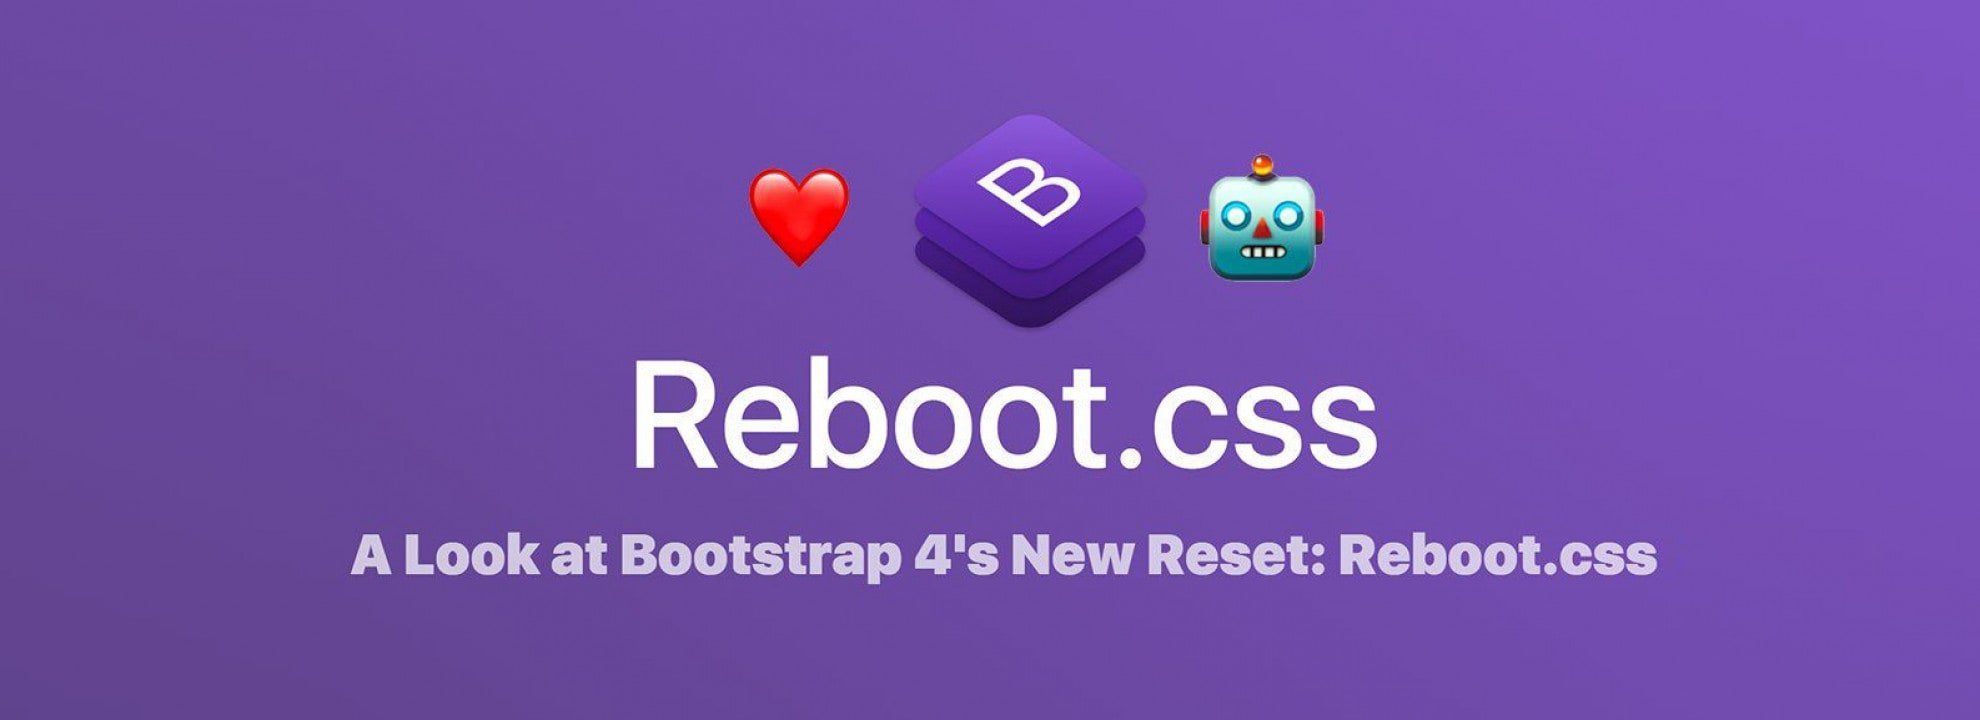 Bootstrap 4 kommt mit Reboot.css als neues Reset